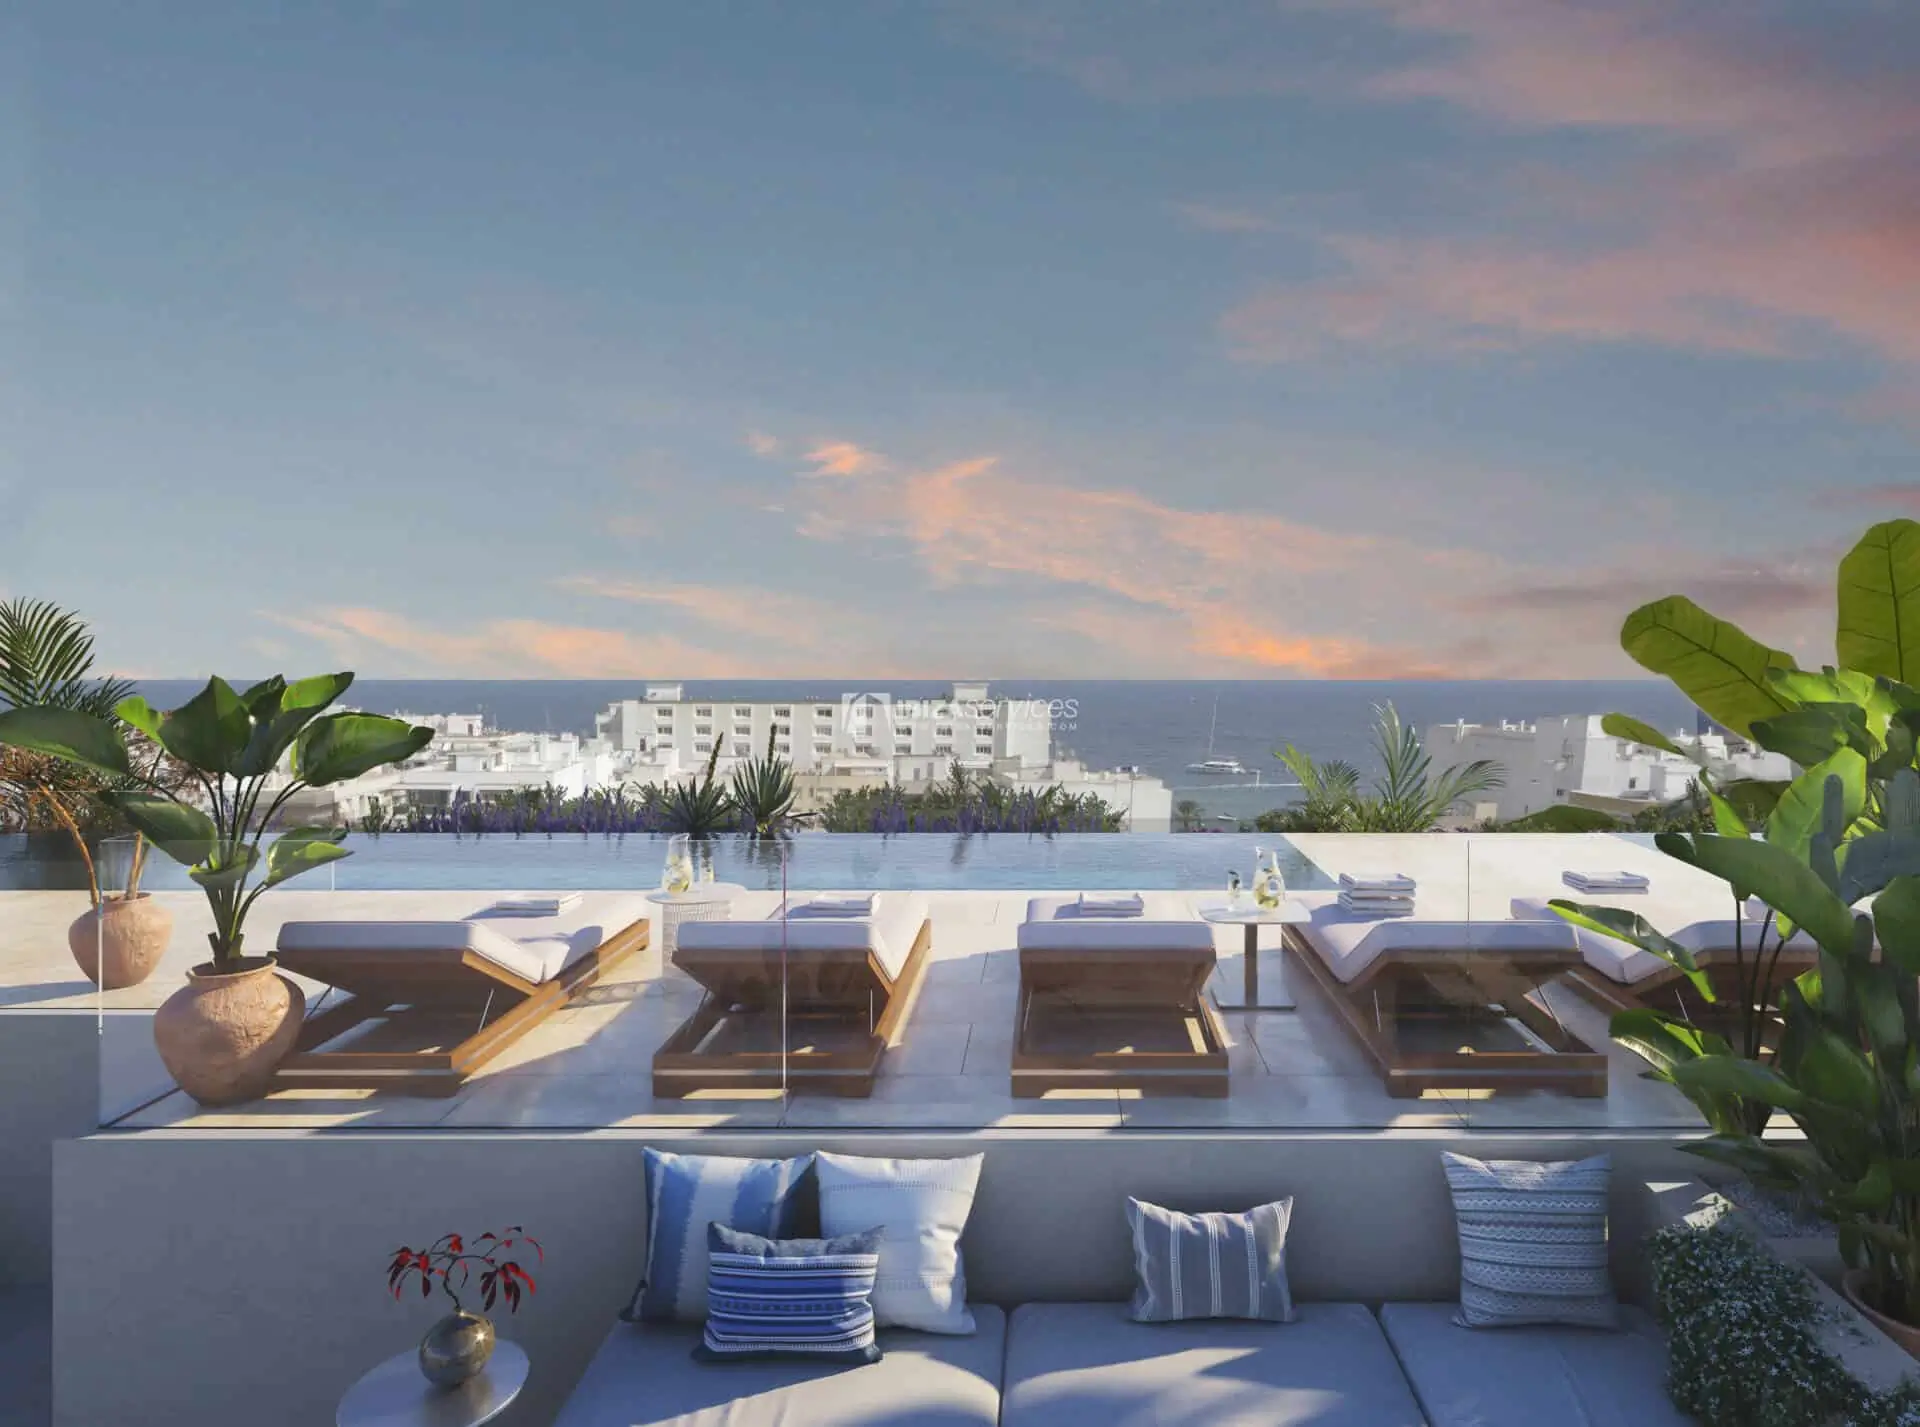 Neues Wohnprojekt mit 57 Häusern in Santa Eulalia, Ibiza